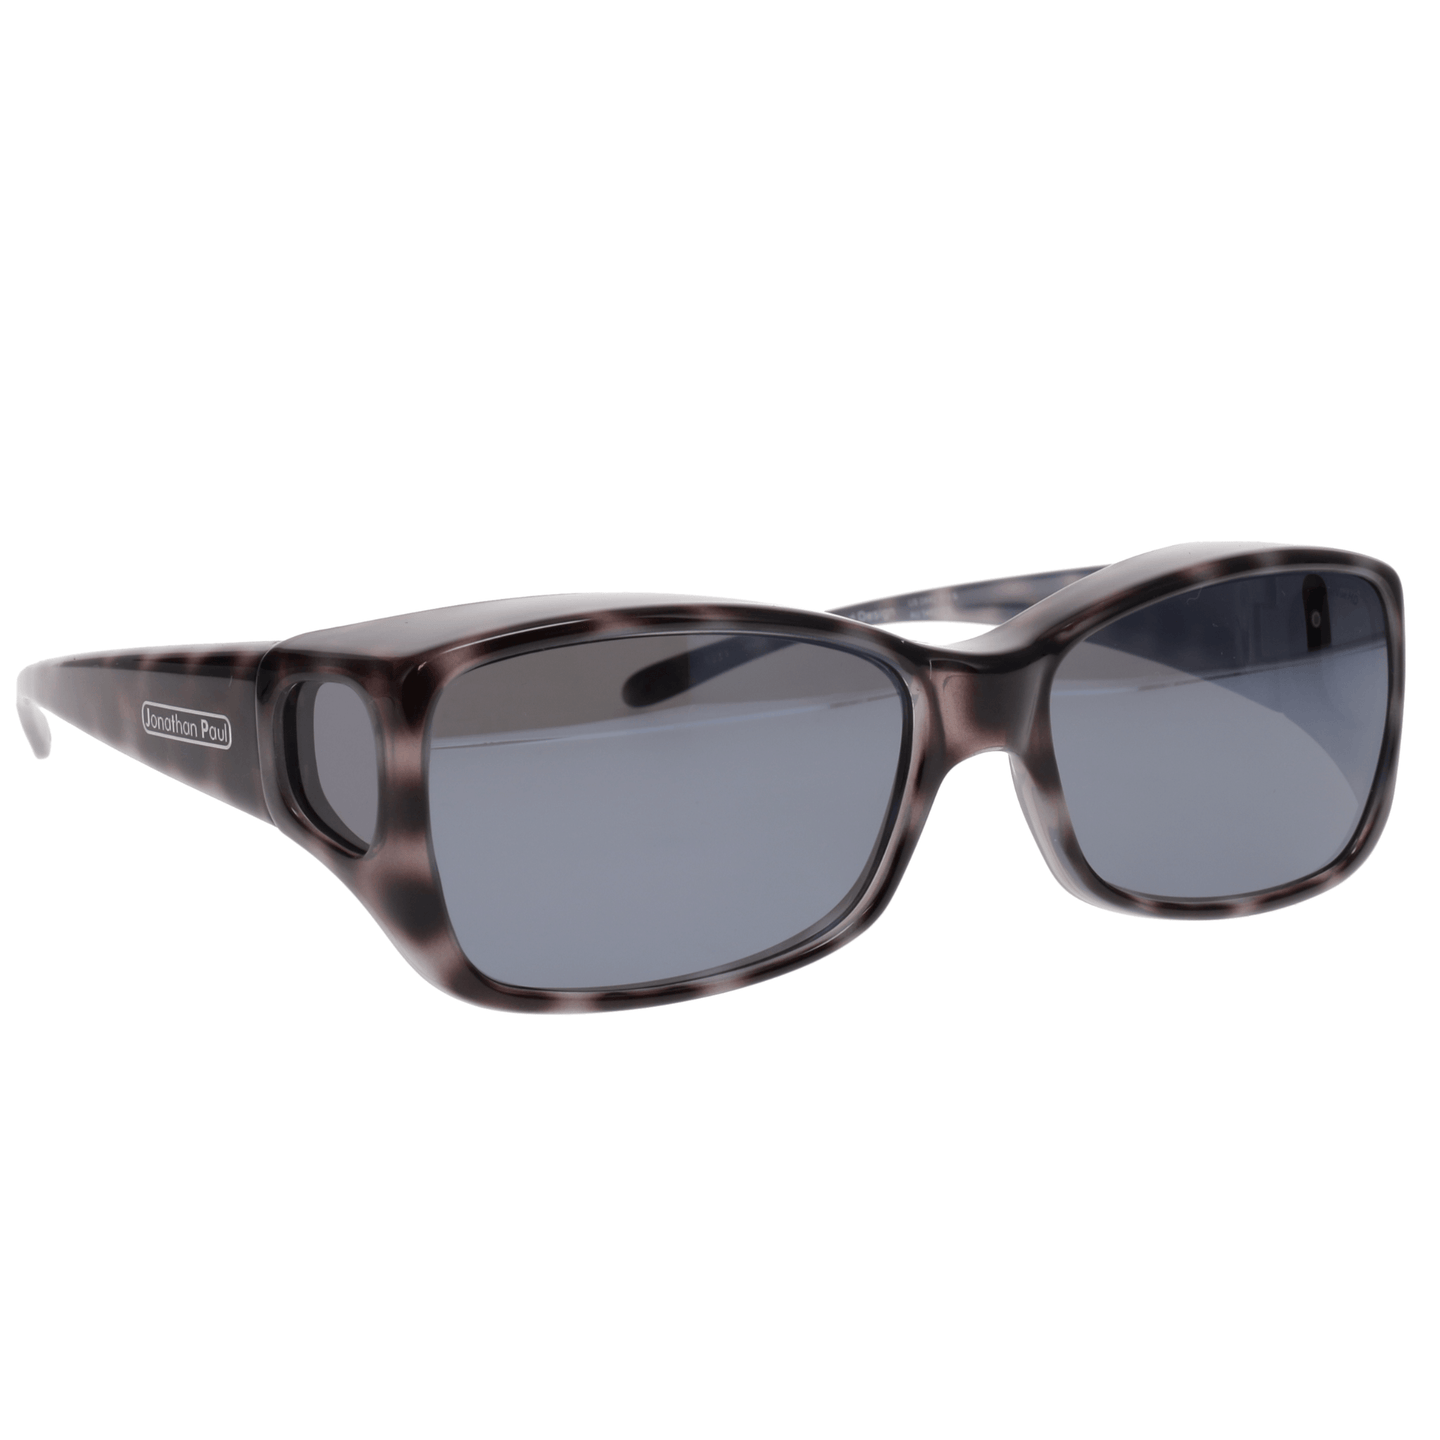 Fitover Sunglasses 'Dahlia' Black Cheetah - Grey Lens